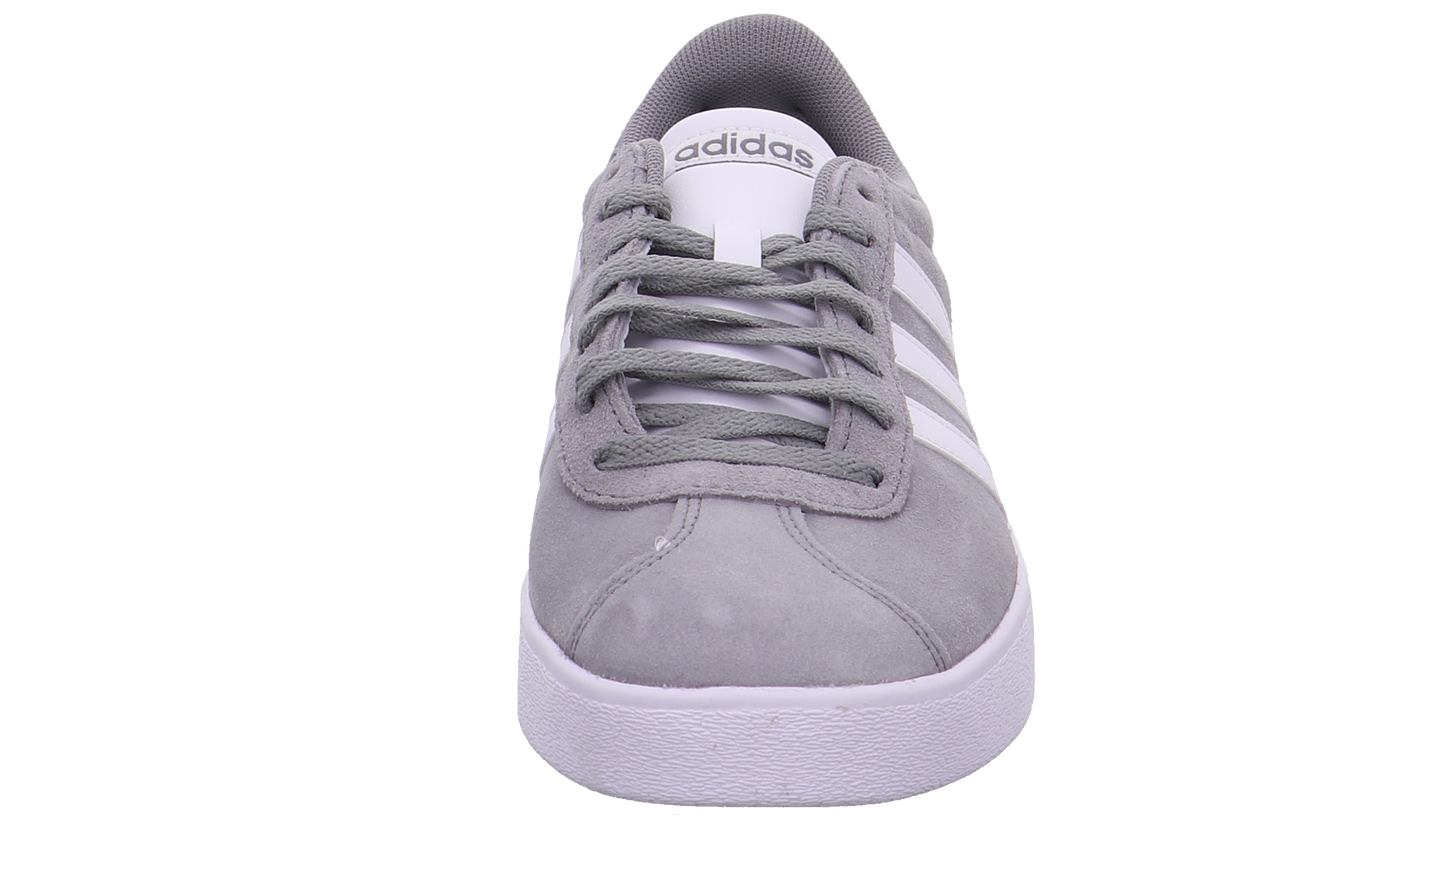 Adidas AG Sneaker grau kombi Bild16